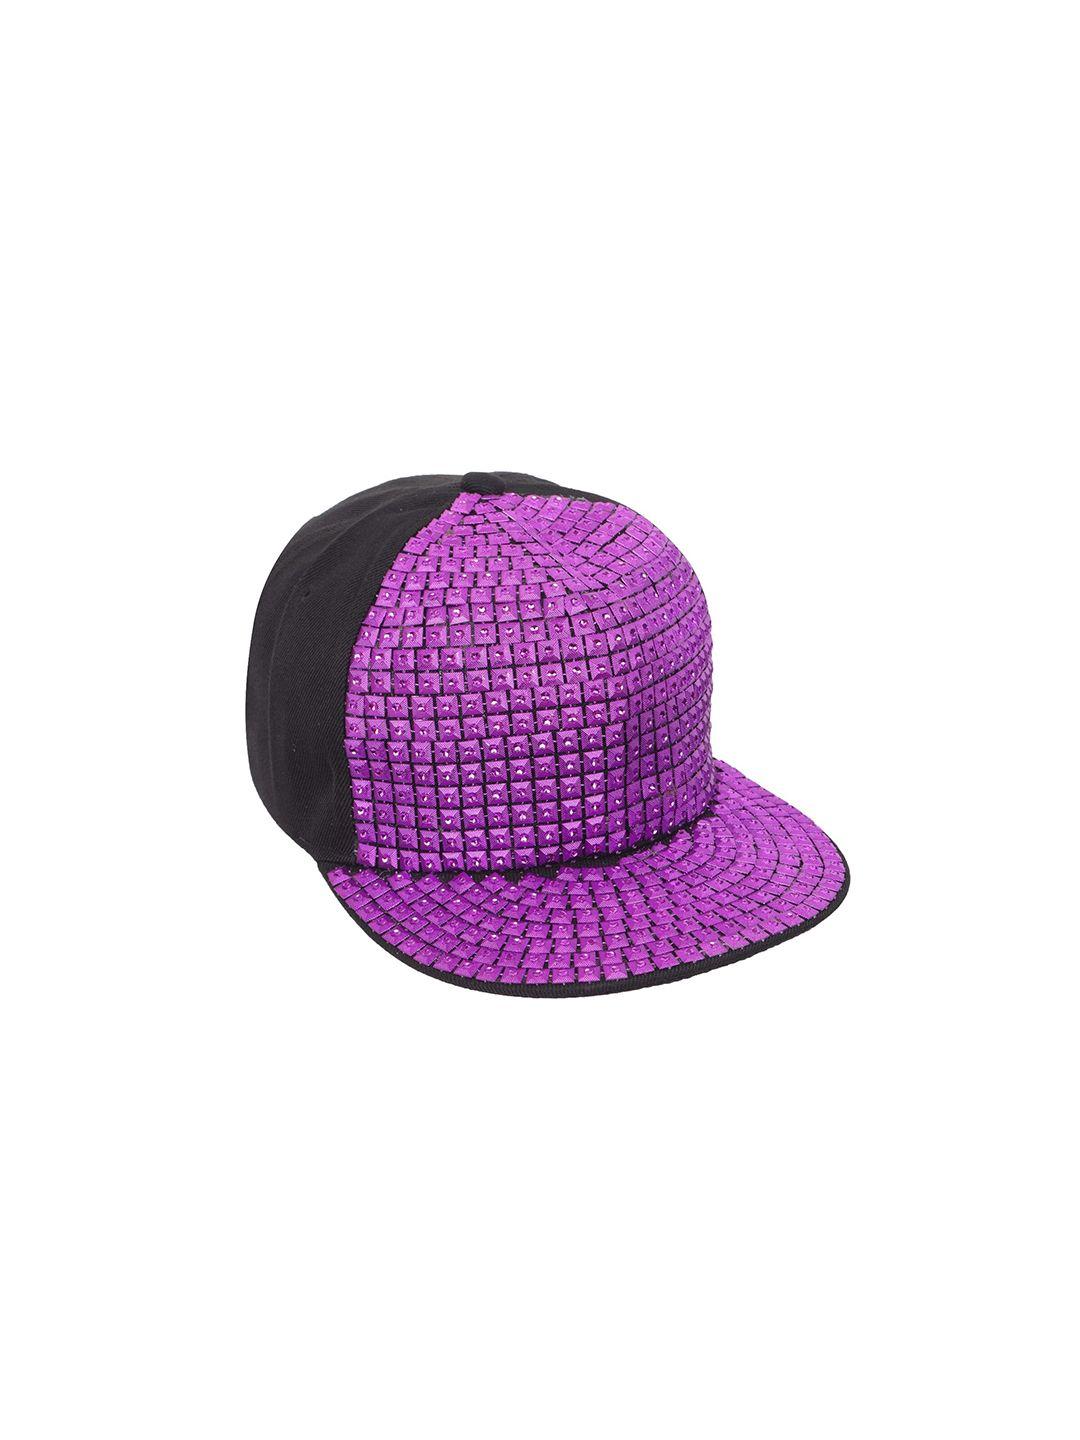 fabseasons men embellished snapback cap